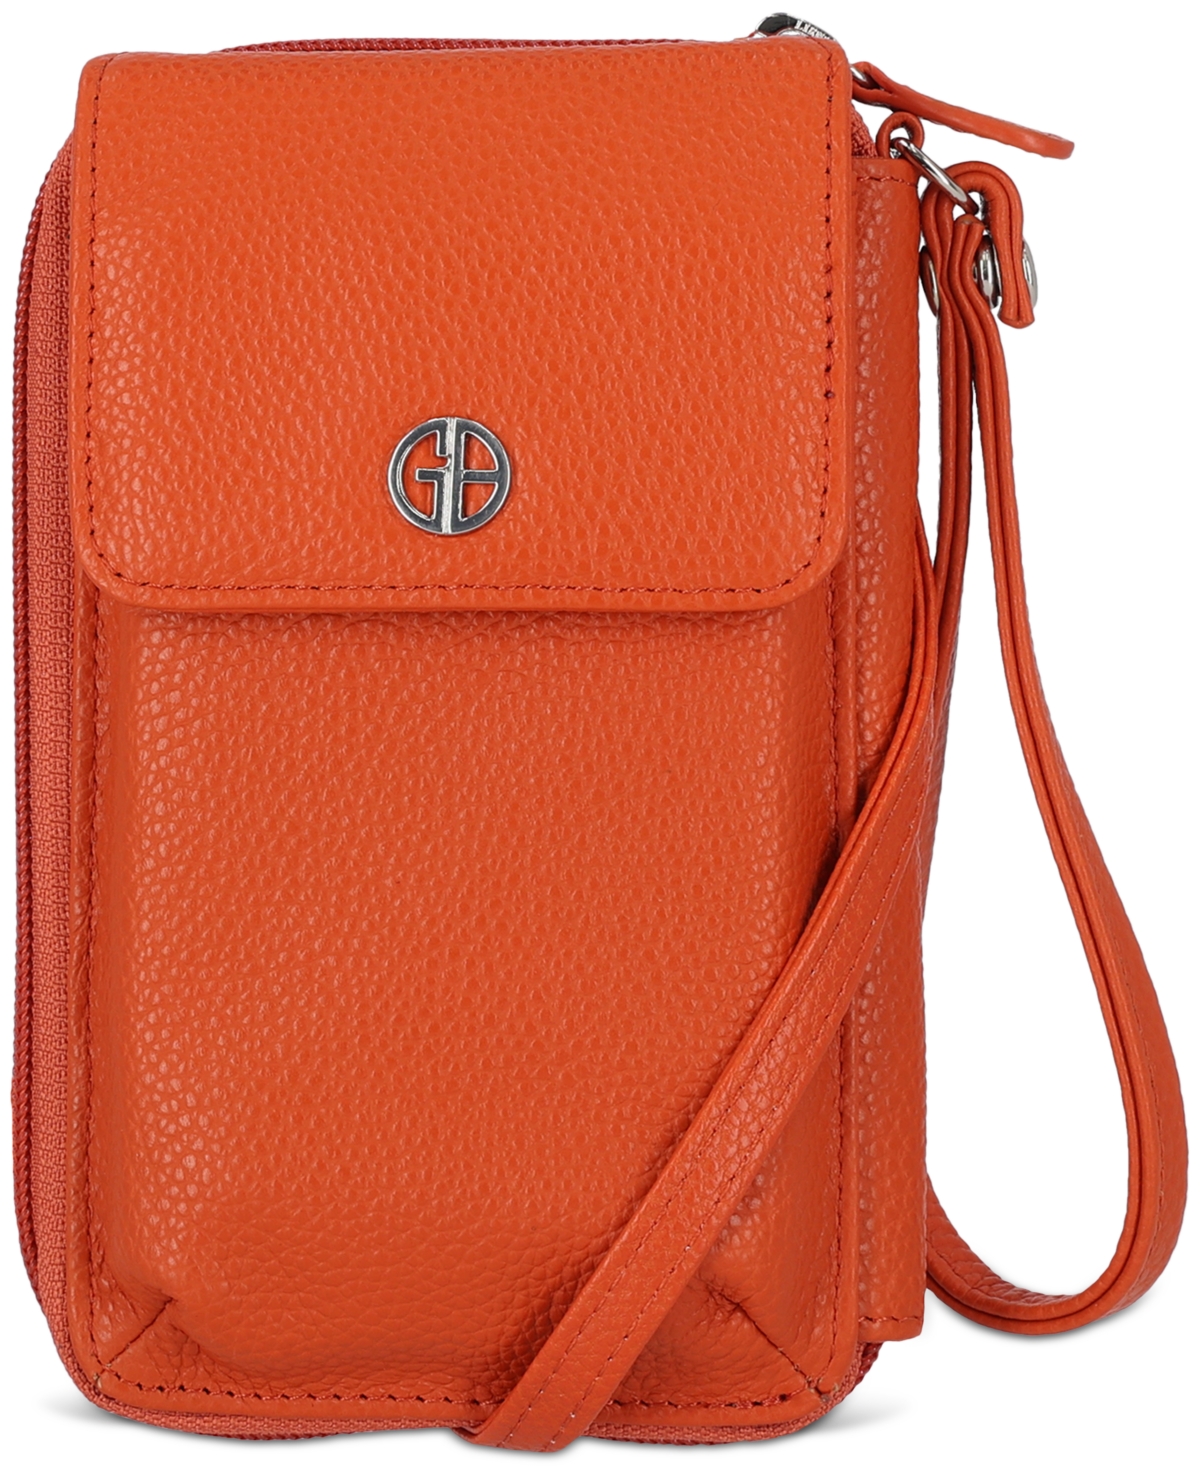 Giani Bernini, Bags, Red Ostrich Leather Crossbody Bag